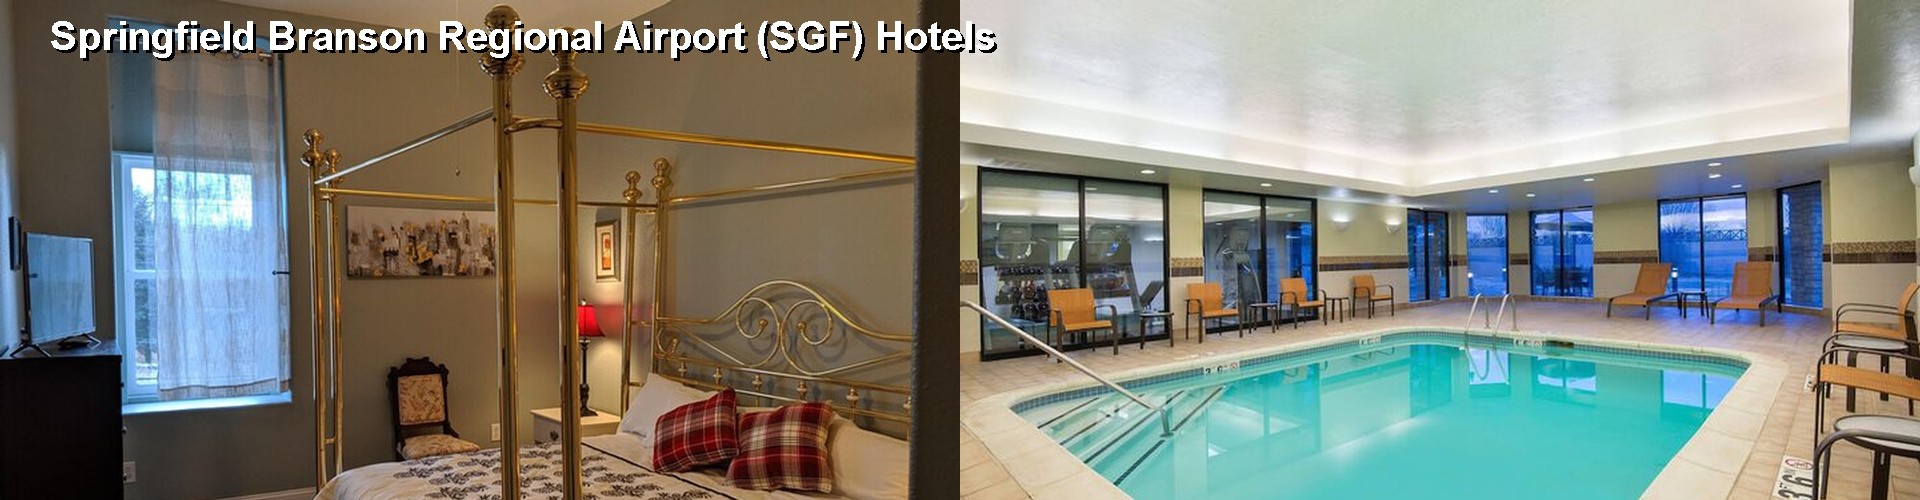 5 Best Hotels near Springfield Branson Regional Airport (SGF)